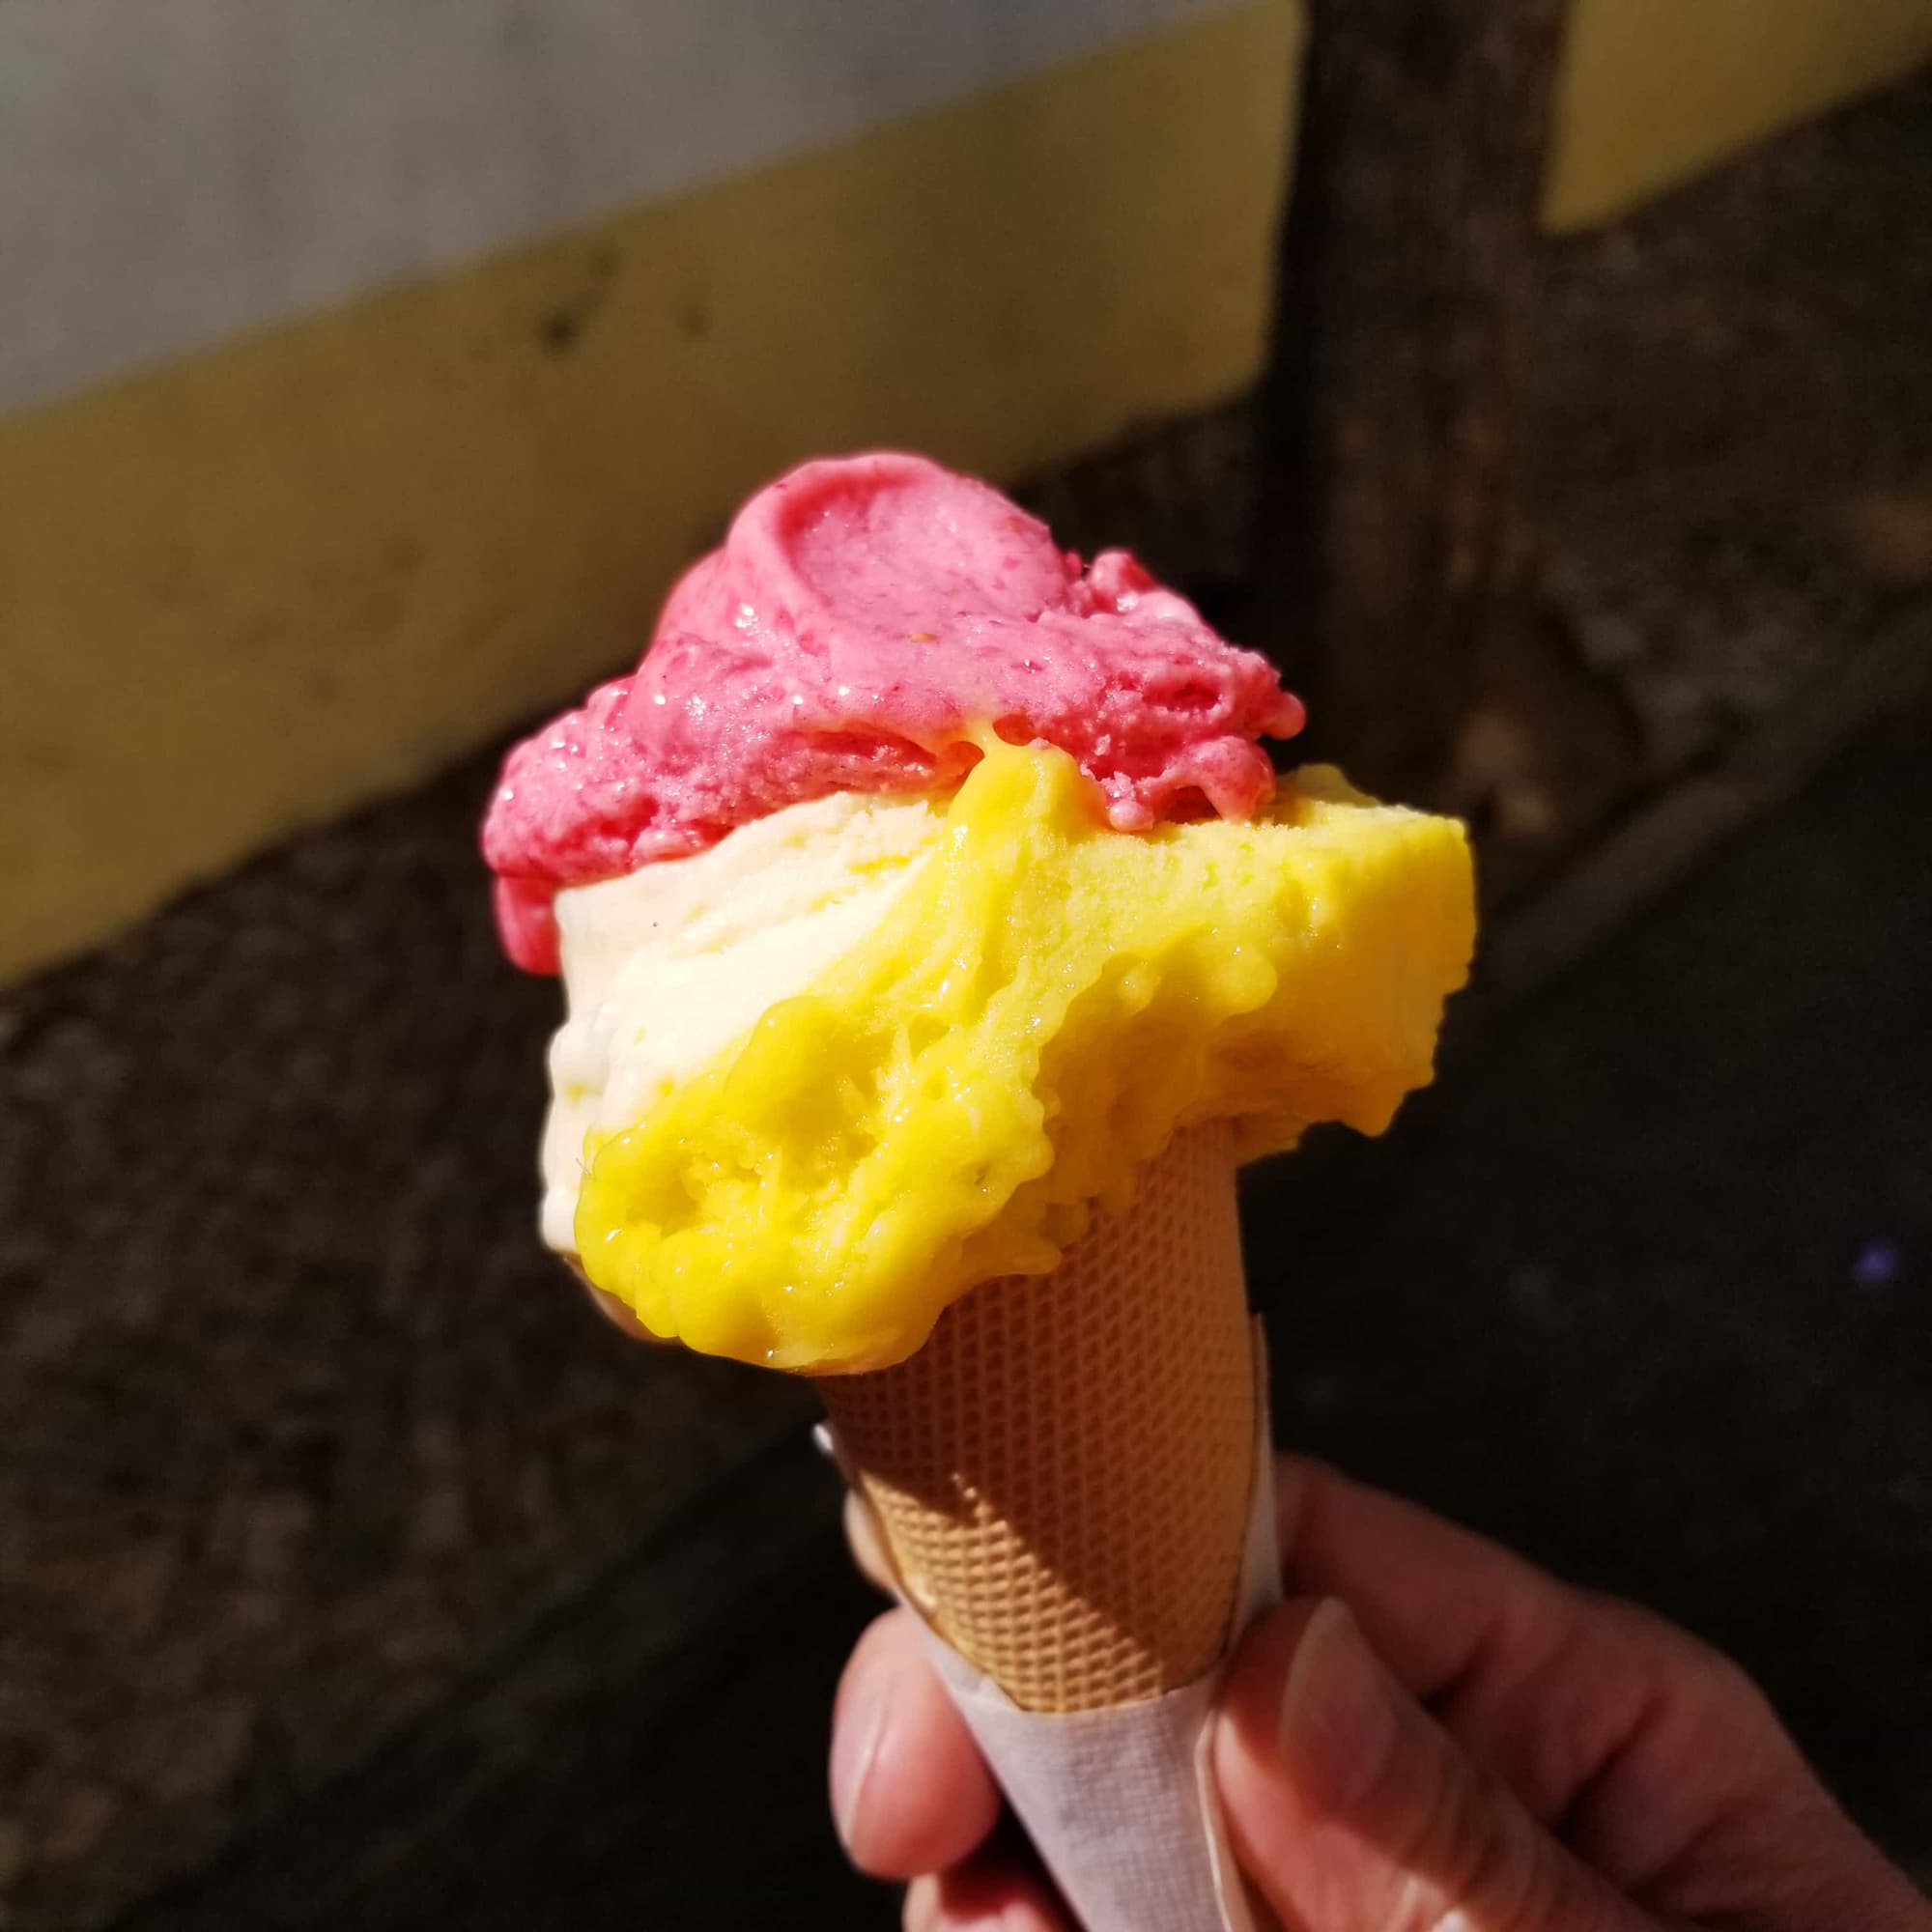 santini gelado 3 flavors on one cone